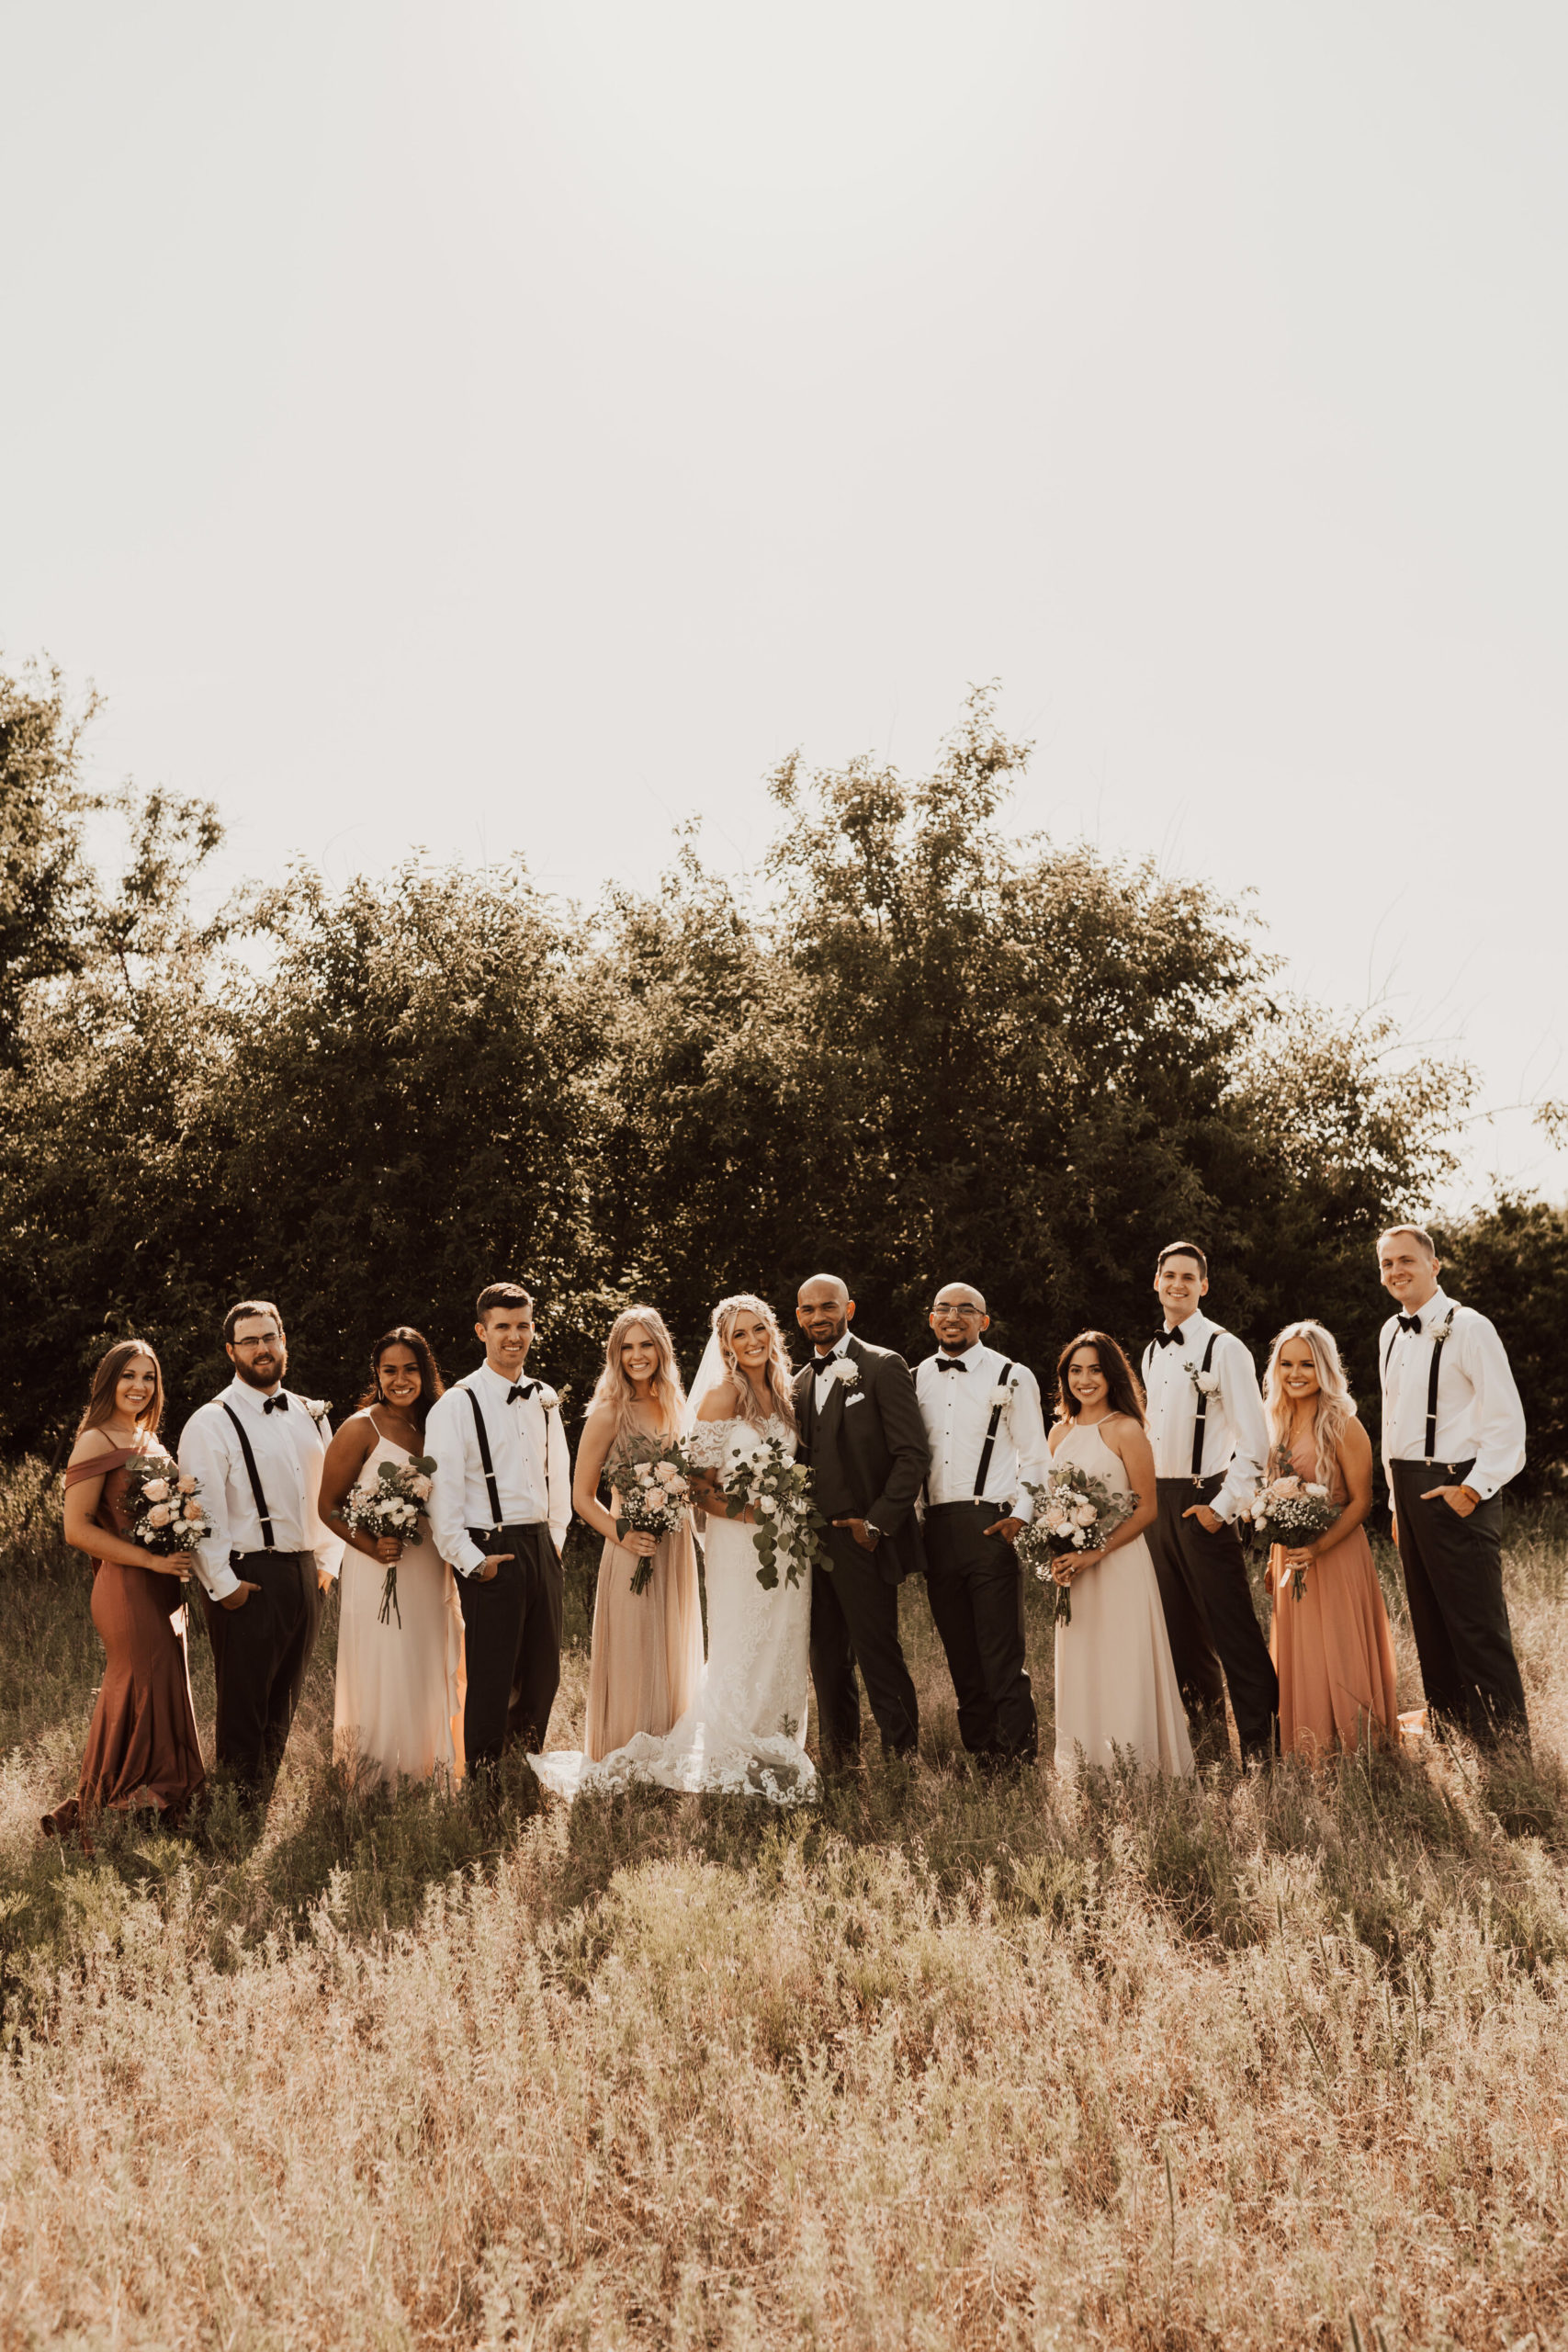 Hayley + Lorenzo - Summer White Chapel Wedding at Stone Hill Barn in Augusta, Kansas120.jpg